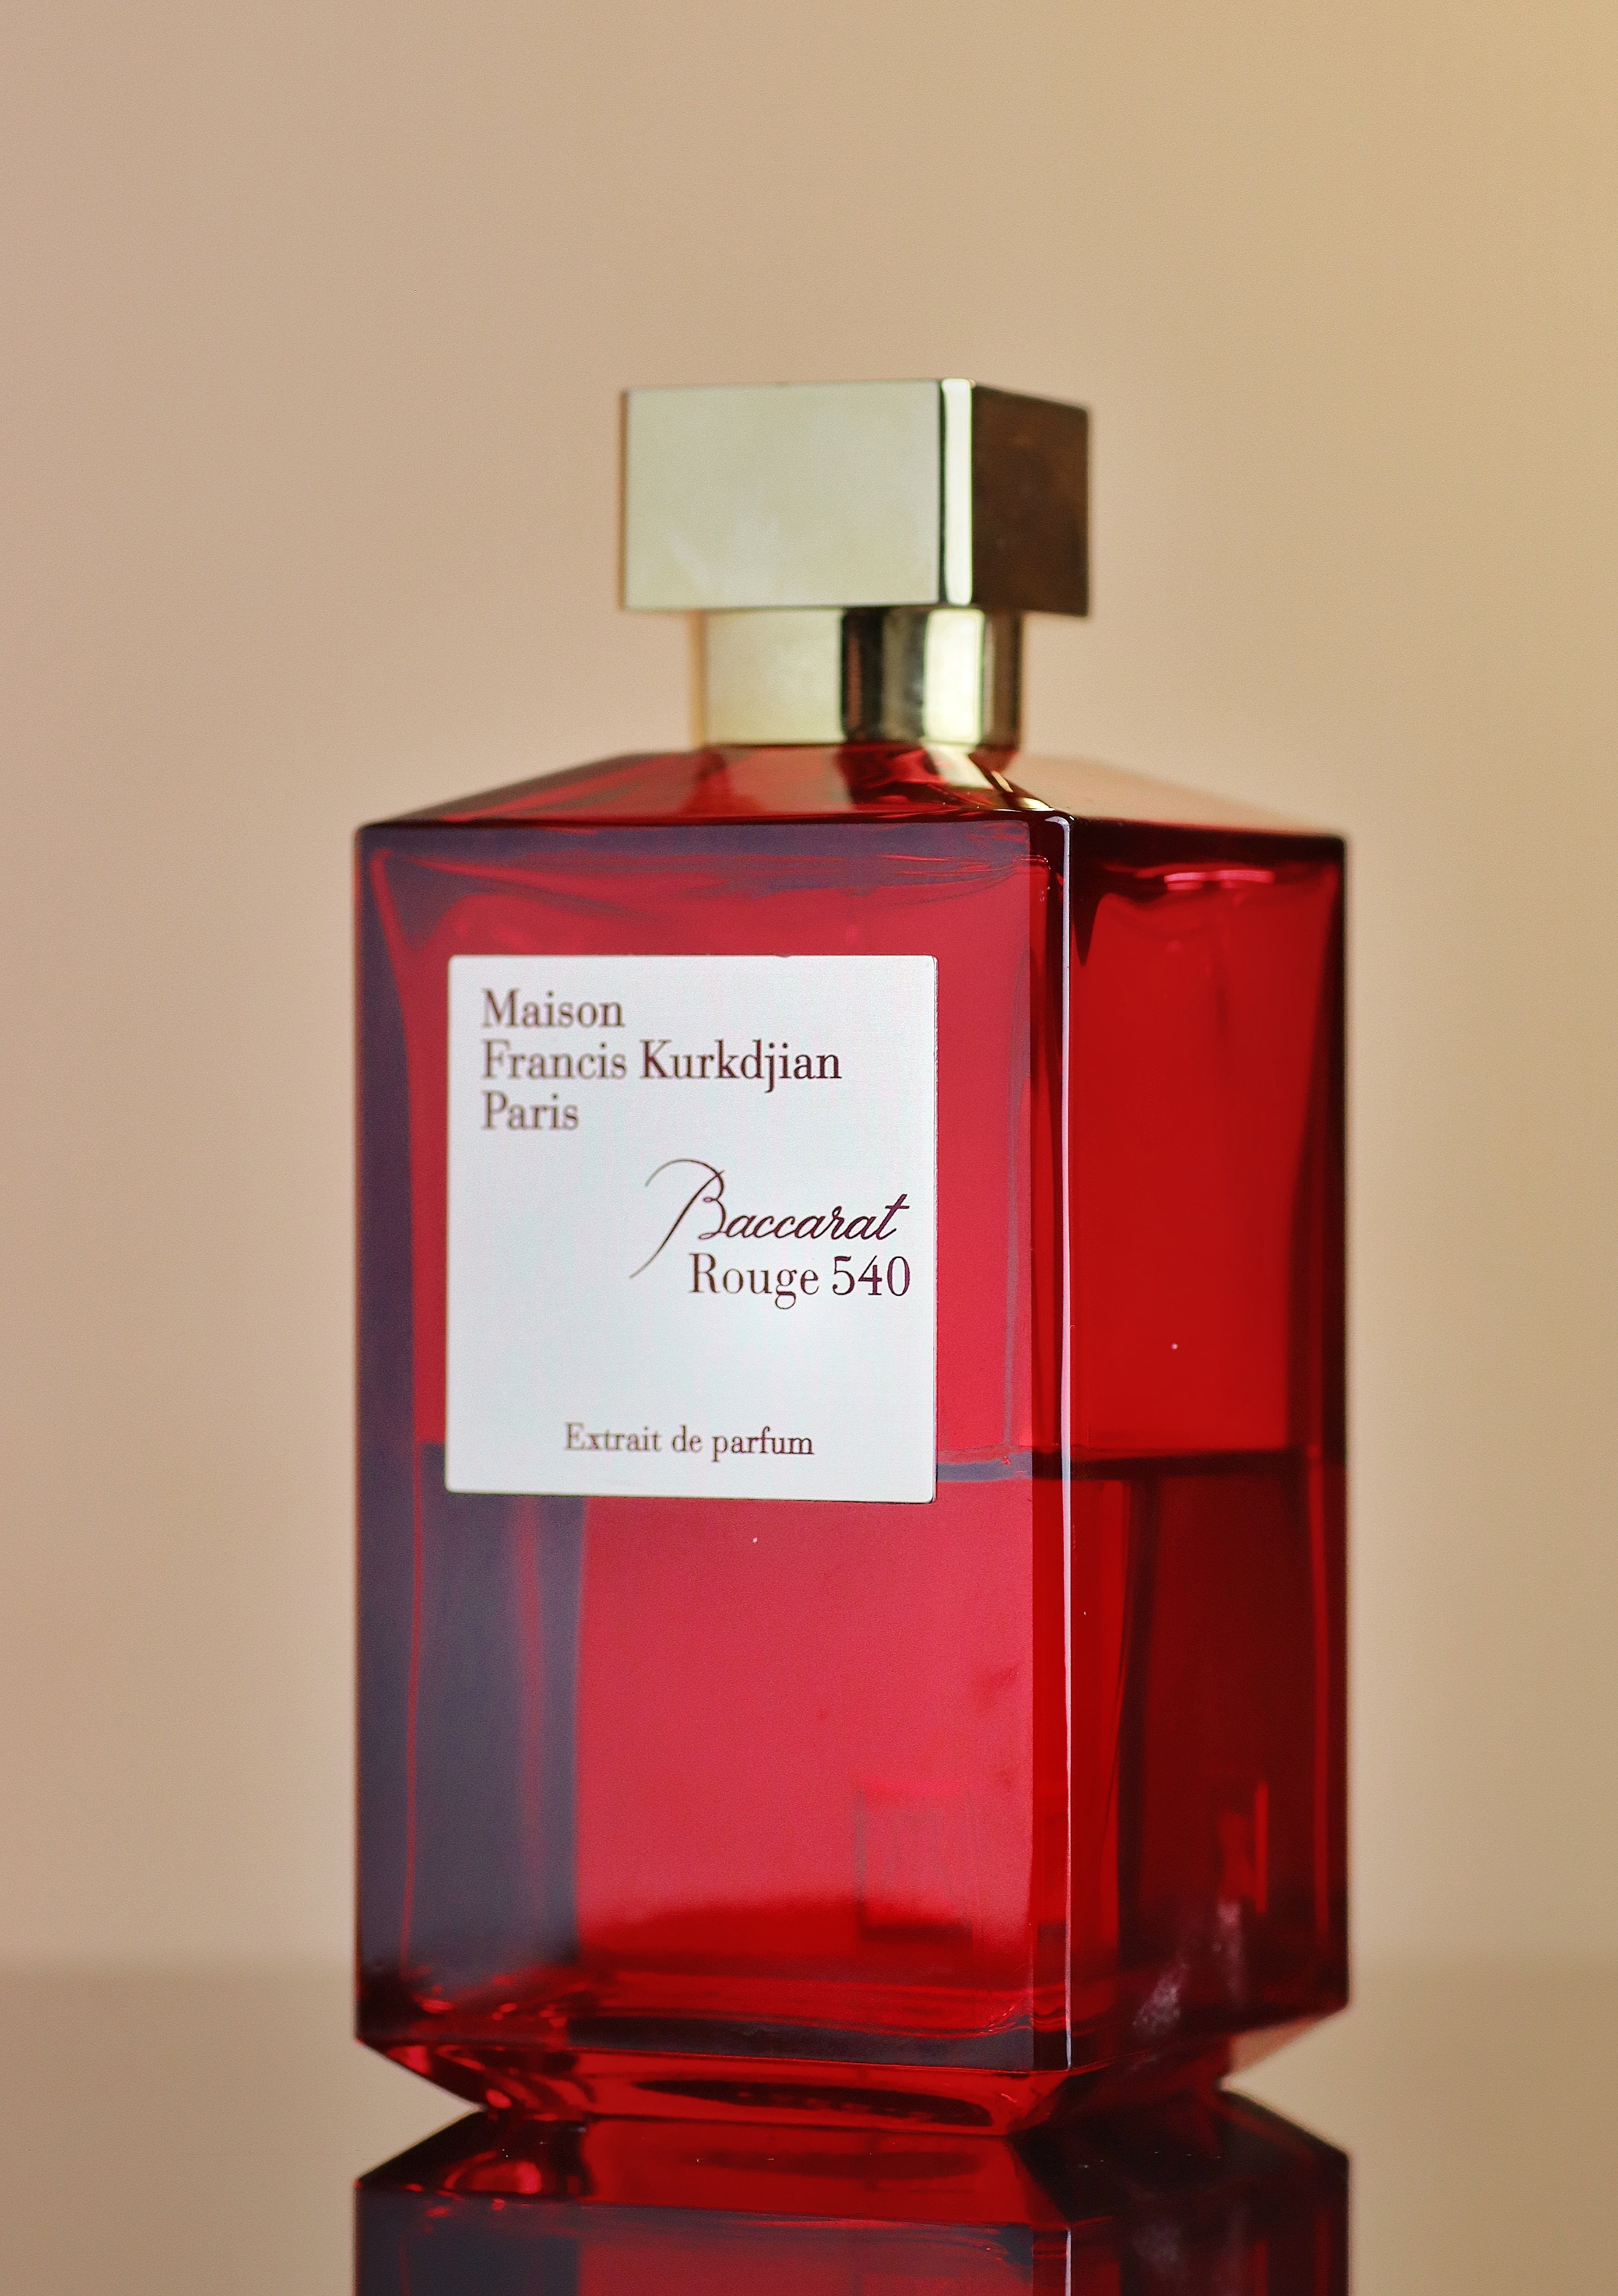 Maison Francis Kurkdjian Factory Filled Perfume Samples 2mL Each 100%  AUTHENTIC